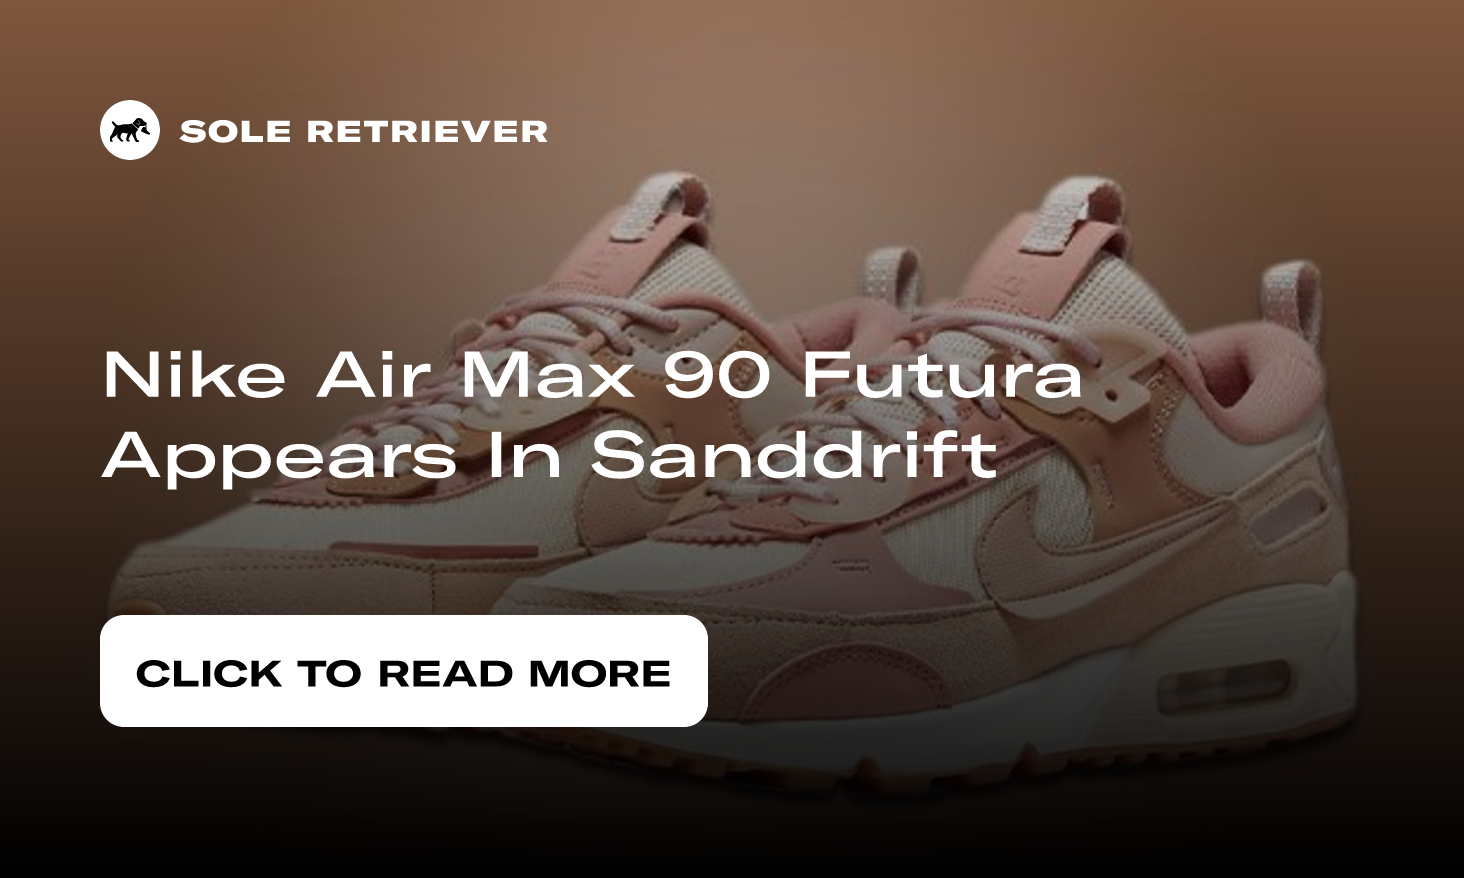 Nike Air Max 90 Futura Appears In Sanddrift - Sneaker News